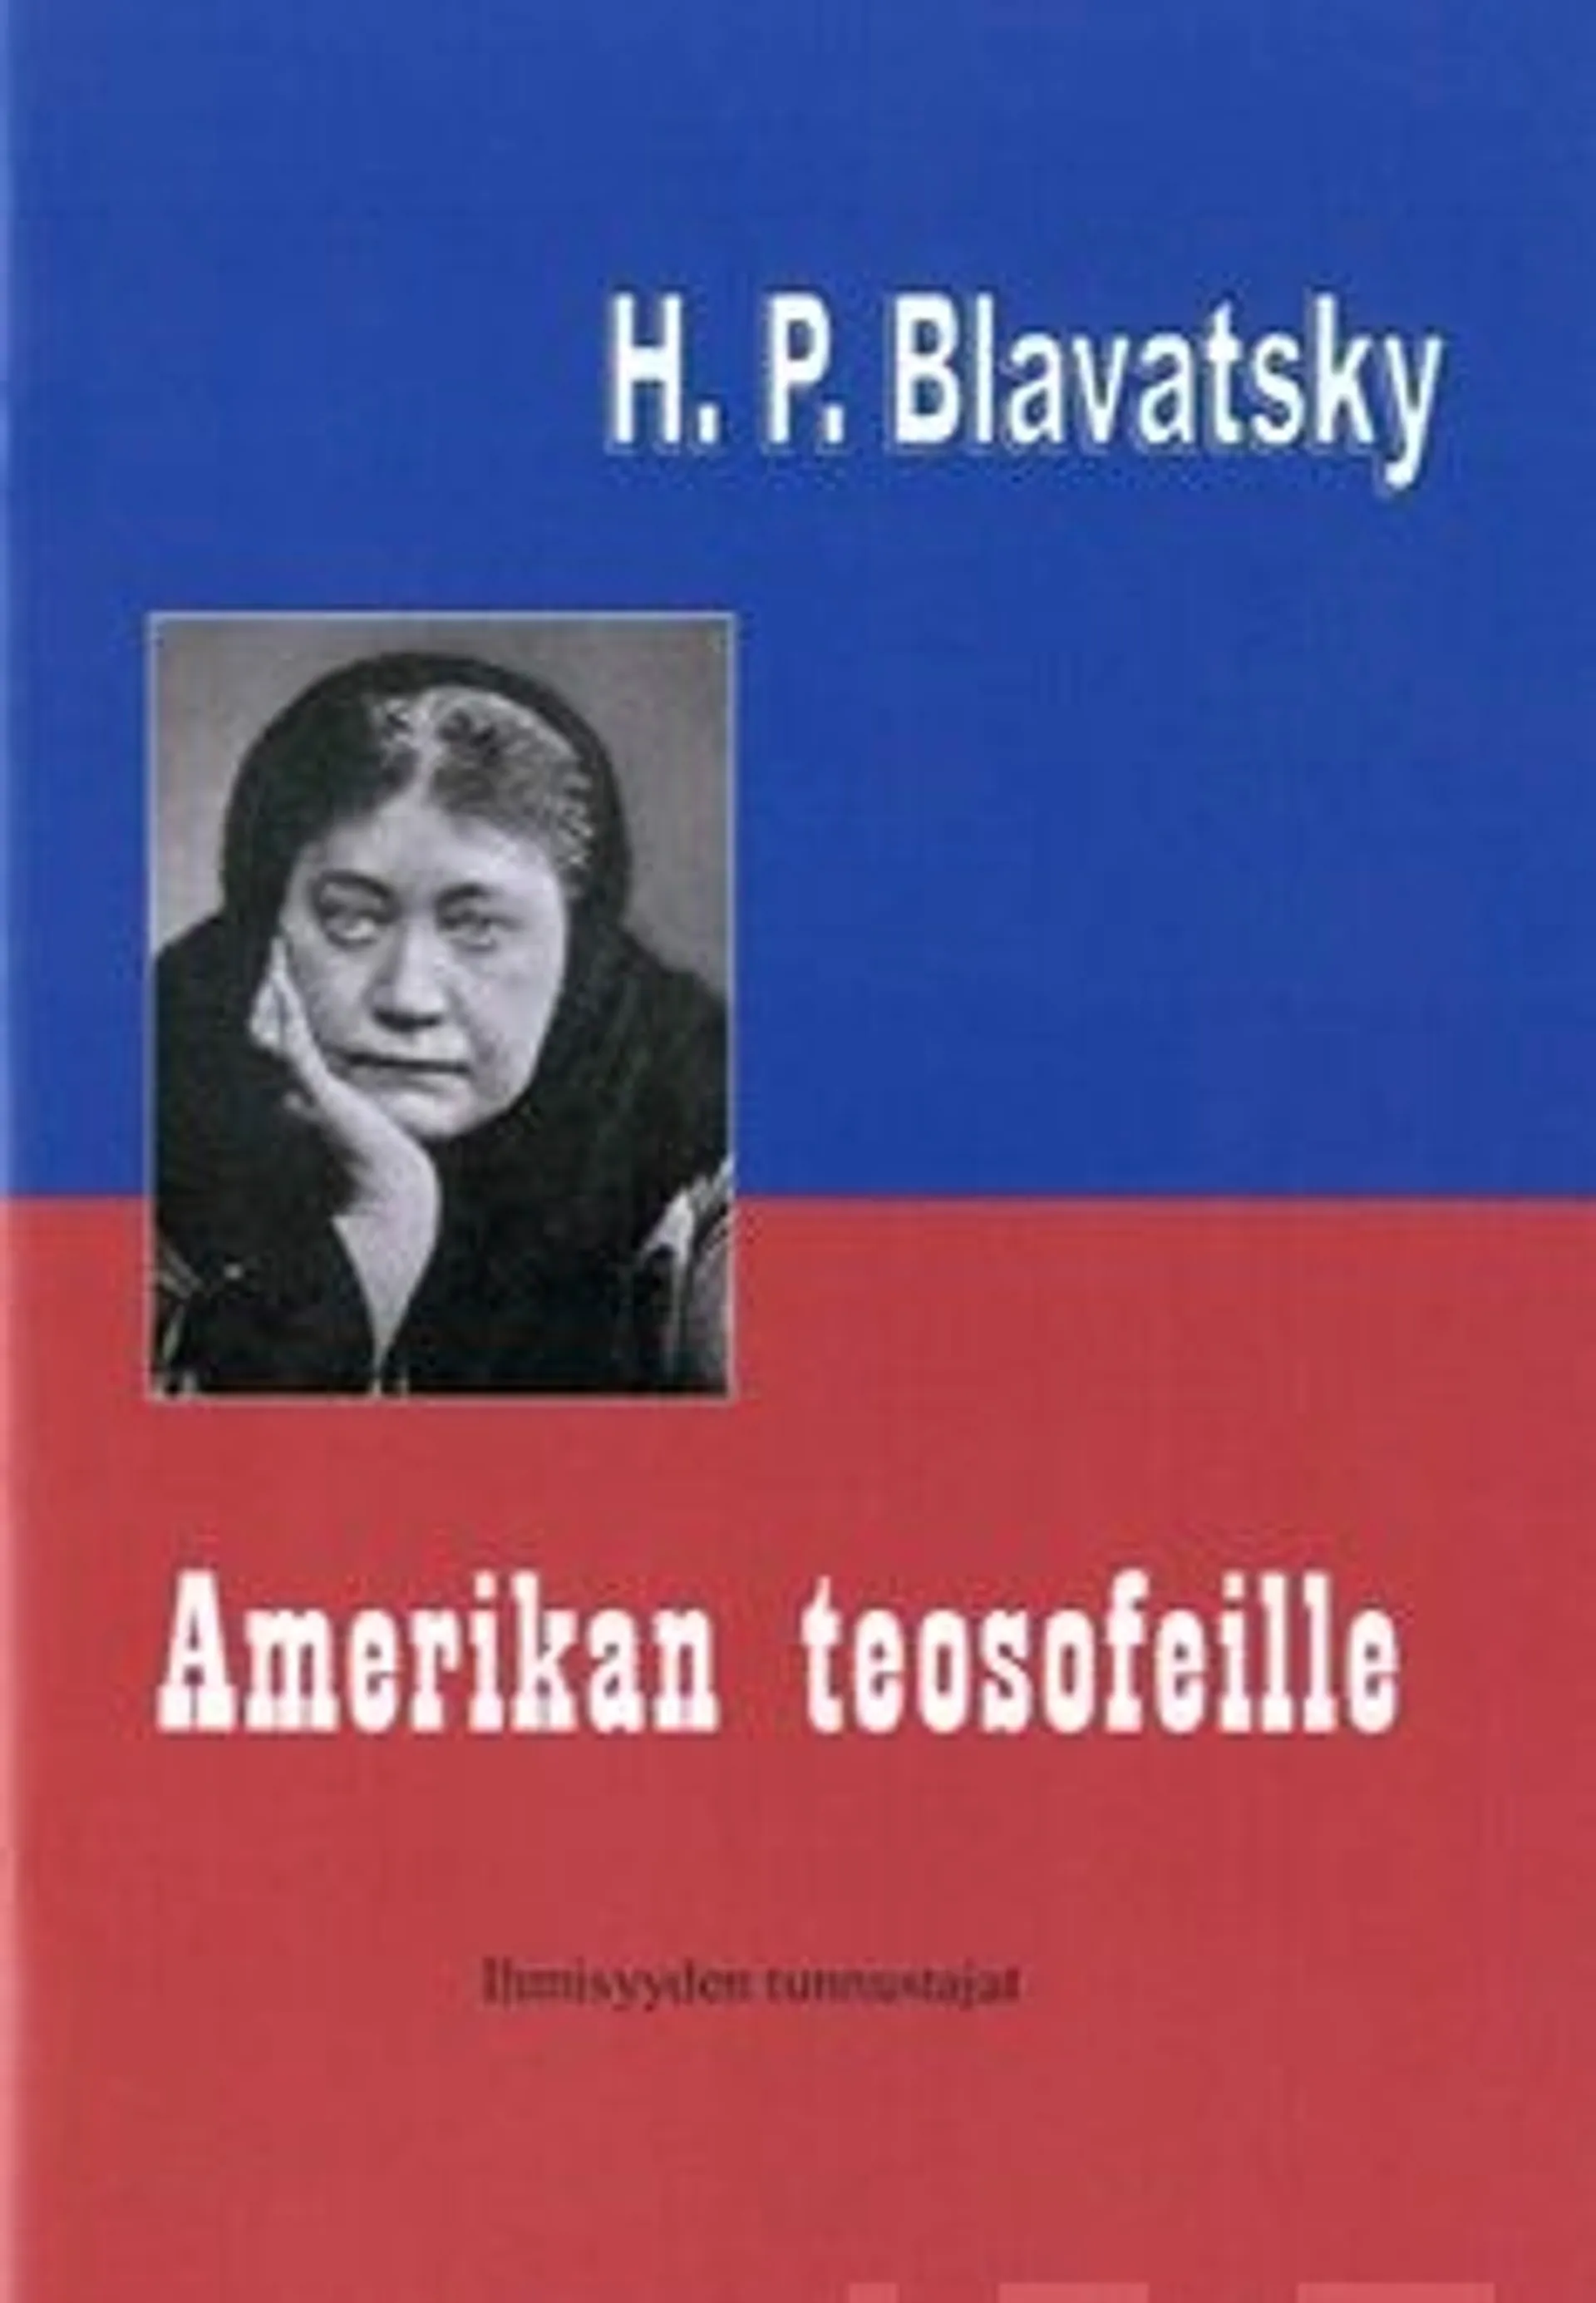 Blavatsky, Amerikan teosofeille